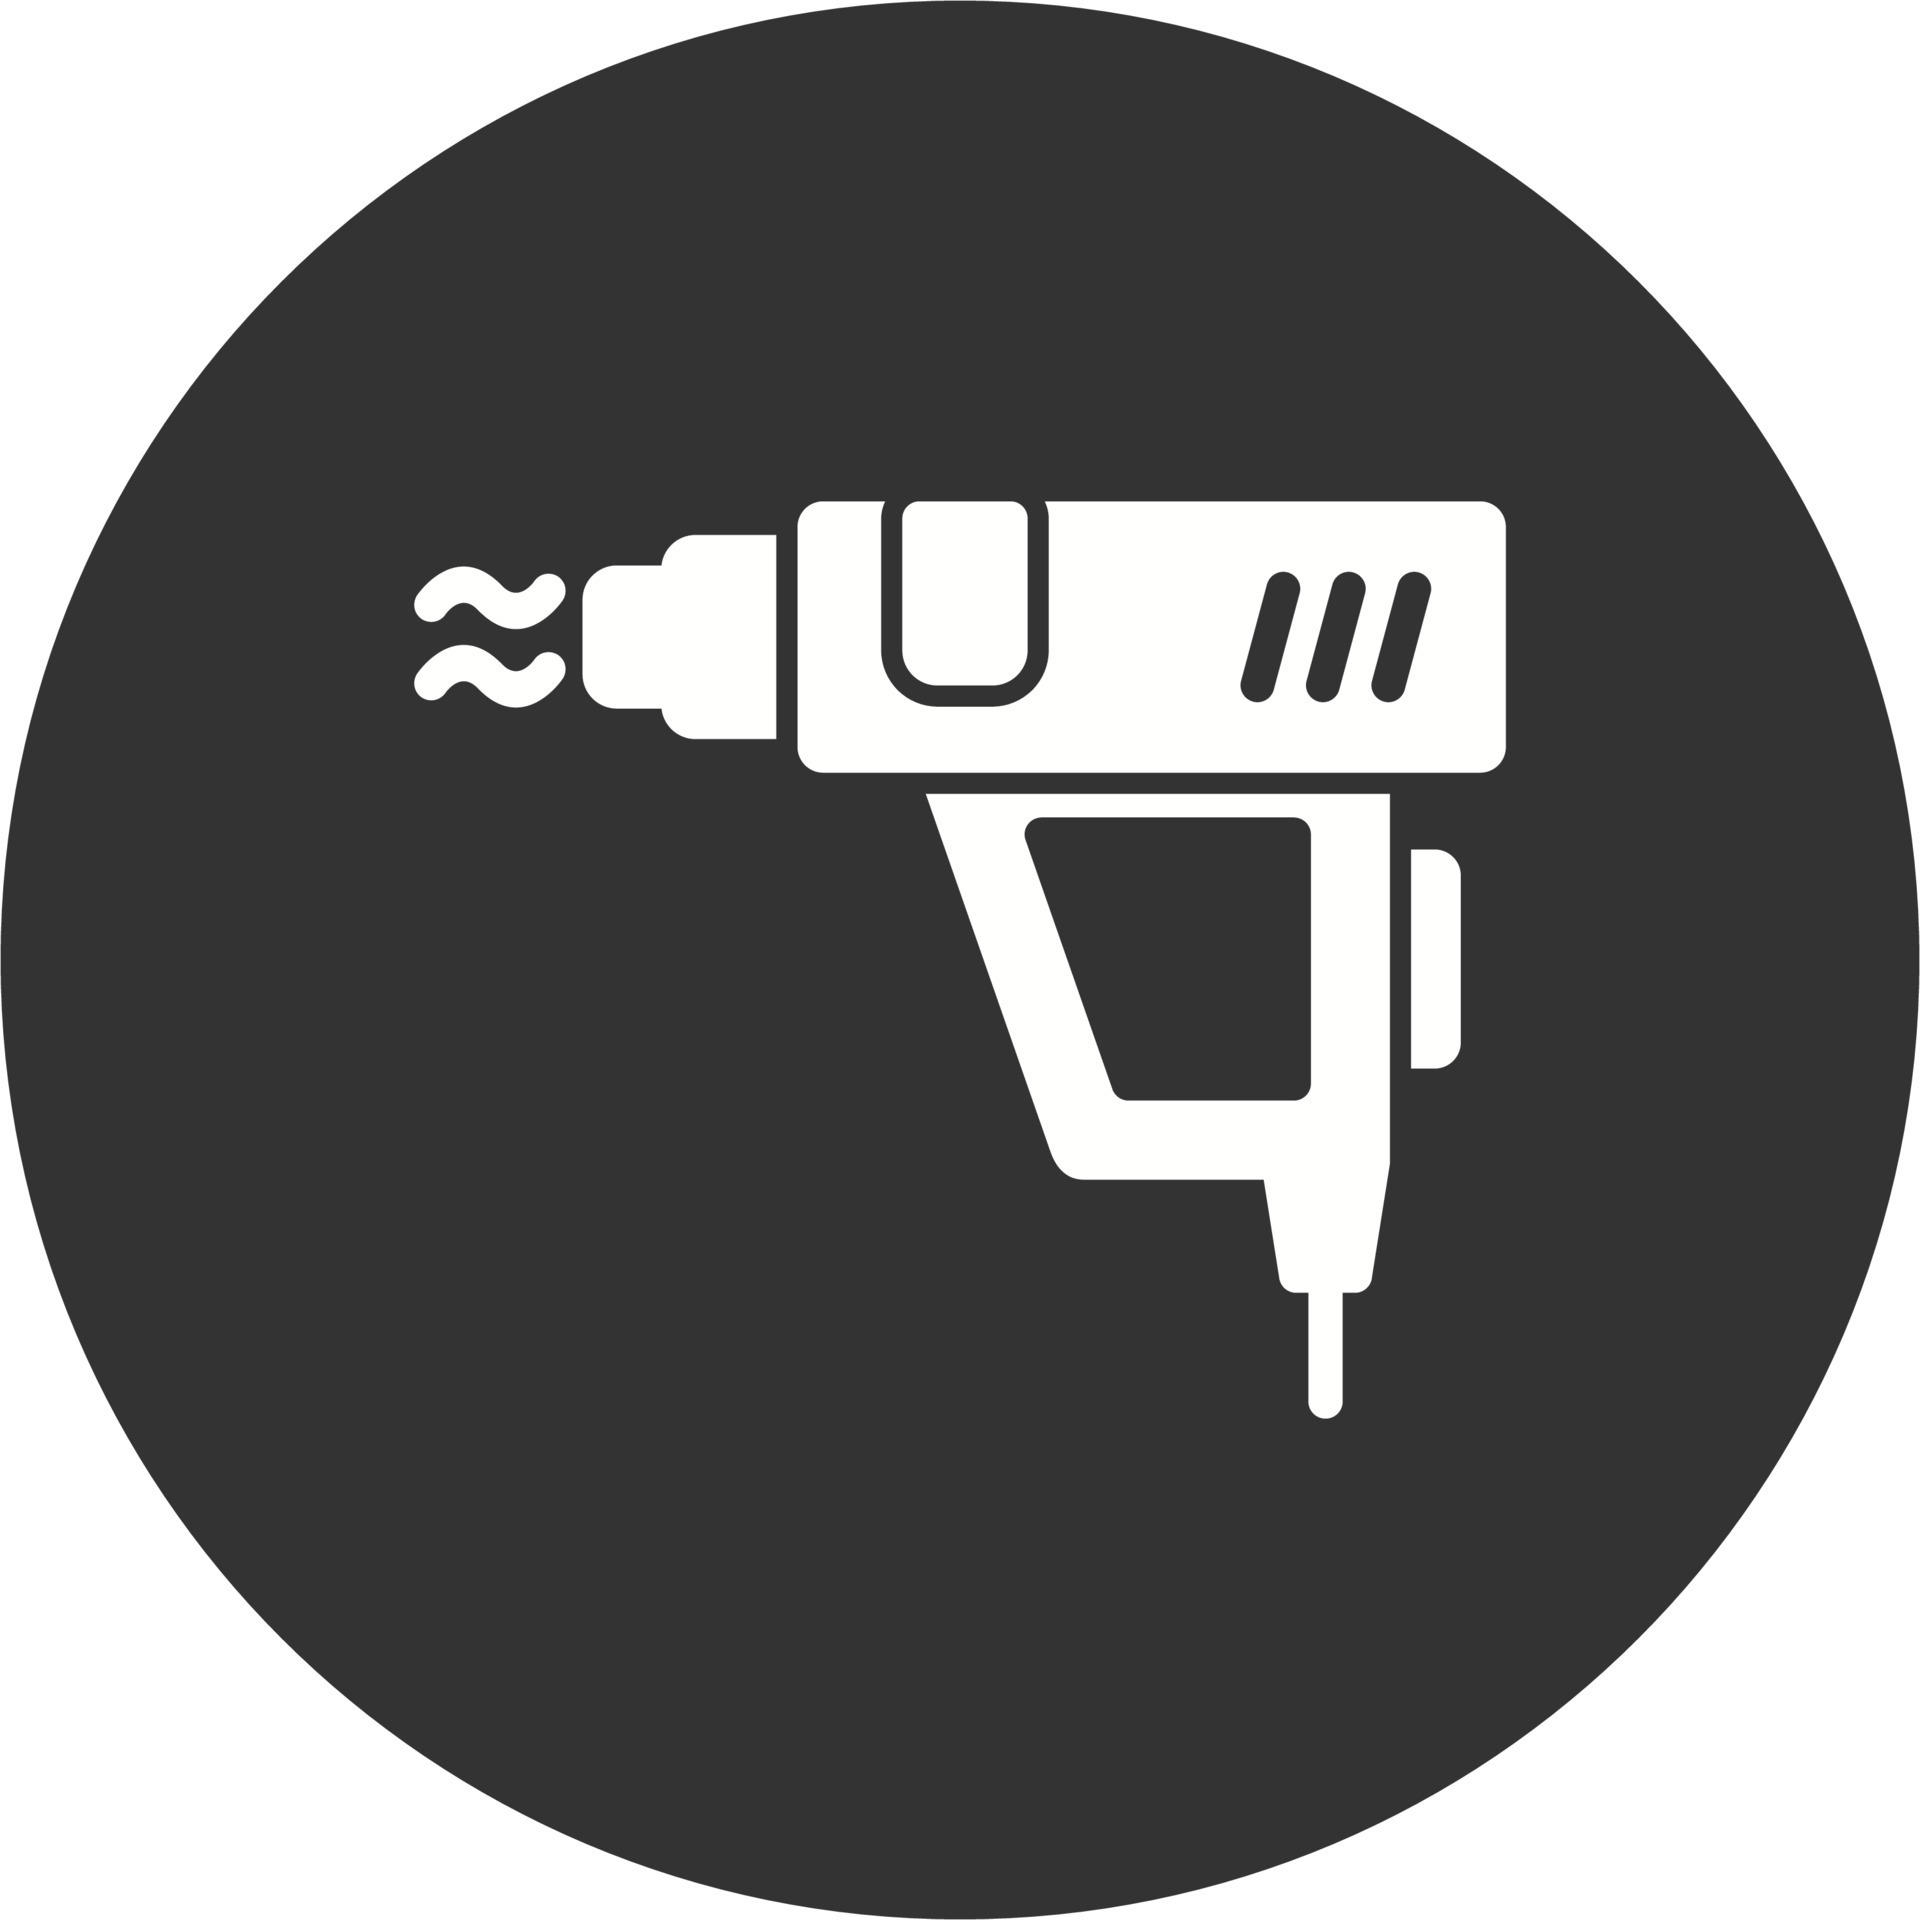 https://static.vecteezy.com/system/resources/previews/019/778/240/original/heat-gun-icon-vector.jpg